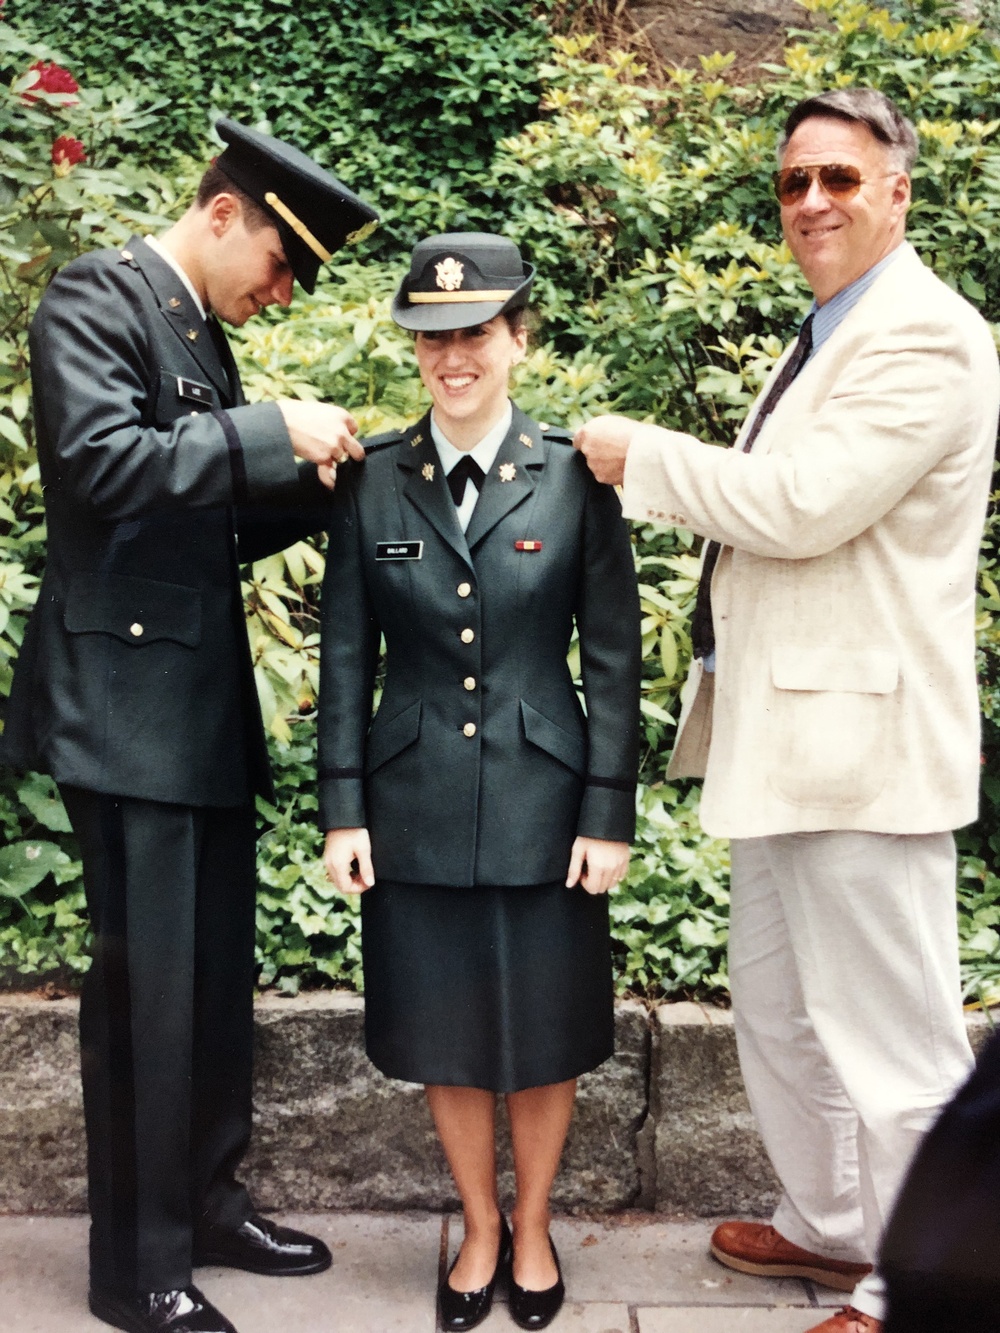 Bar pinning ceremony in 1992